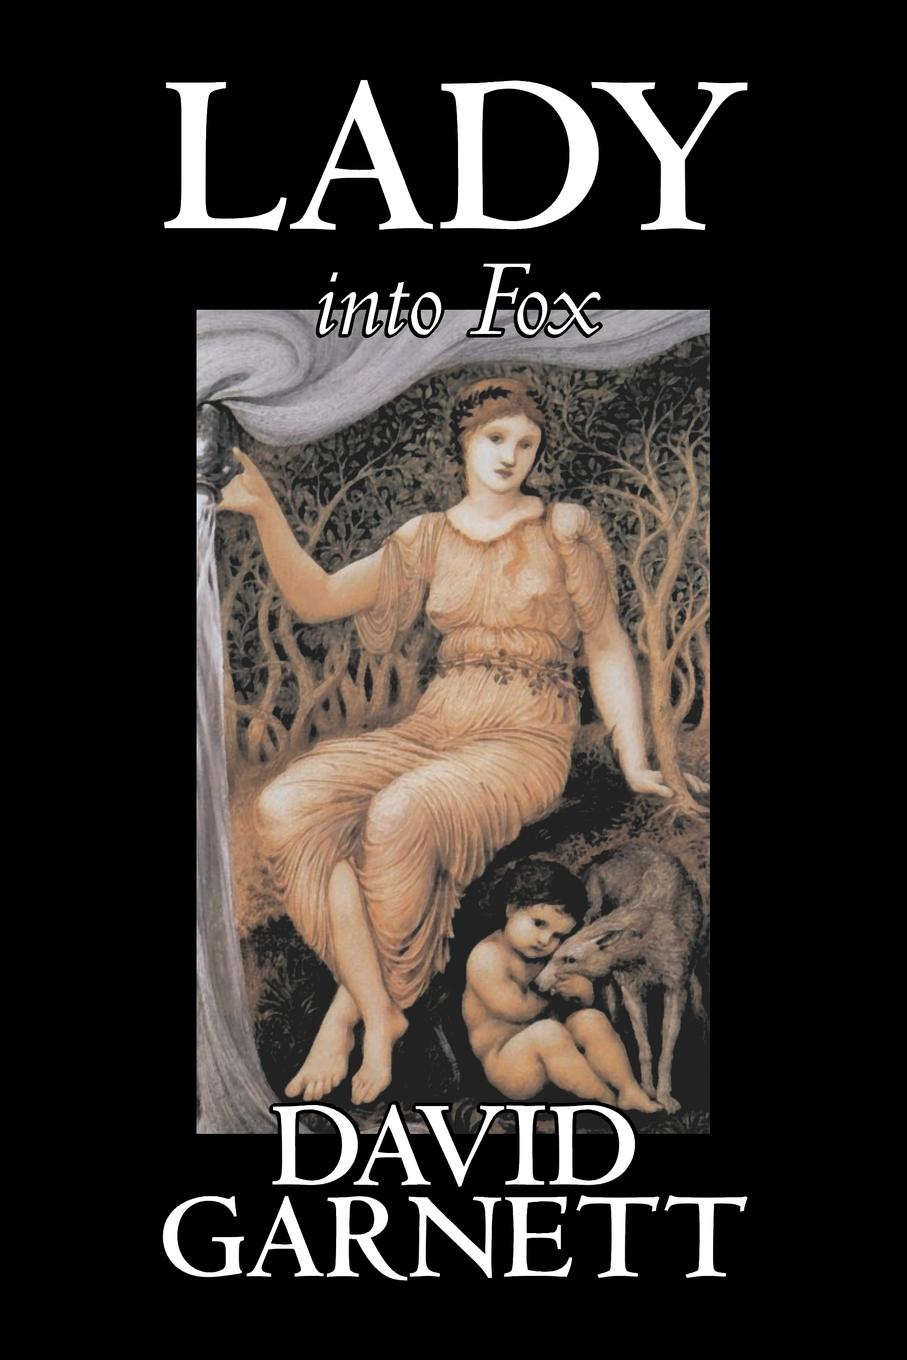 фото Lady into Fox by David Garnett, Fiction, Fantasy & Magic, Classics, Action & Adventure